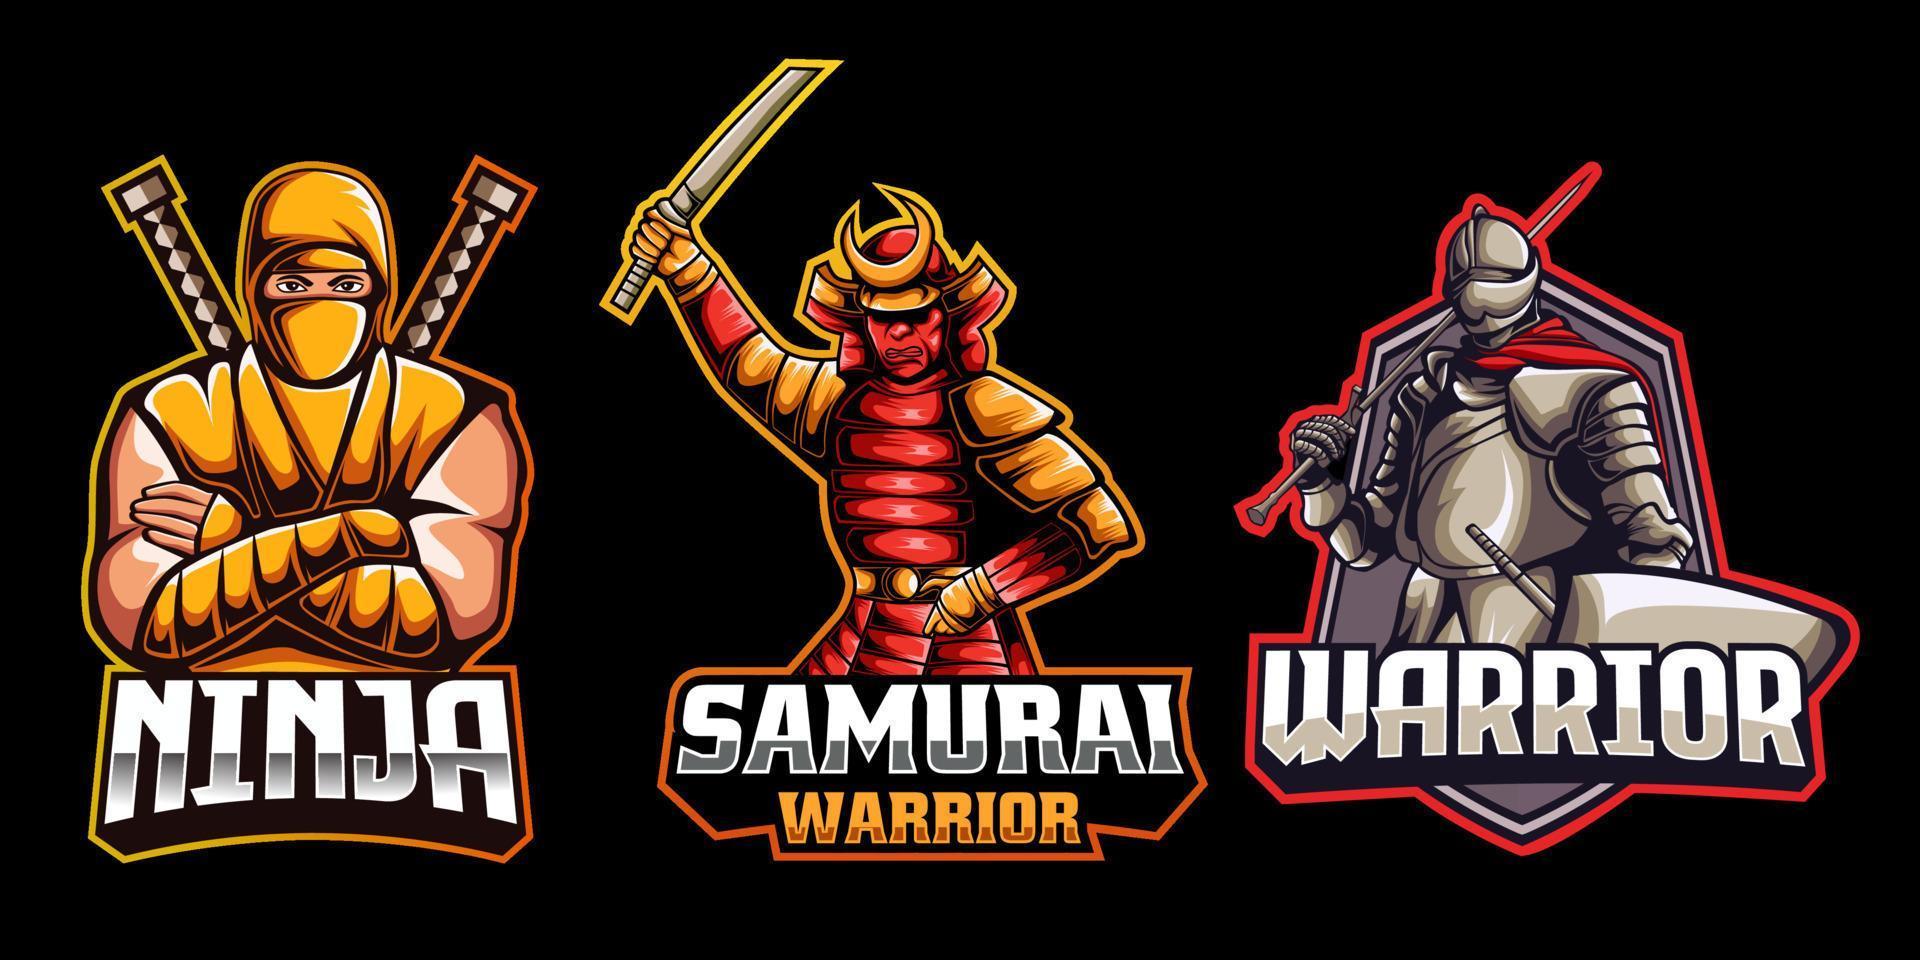 collection of emblems of ninja, samurai, and spartan warrior. vector illustration